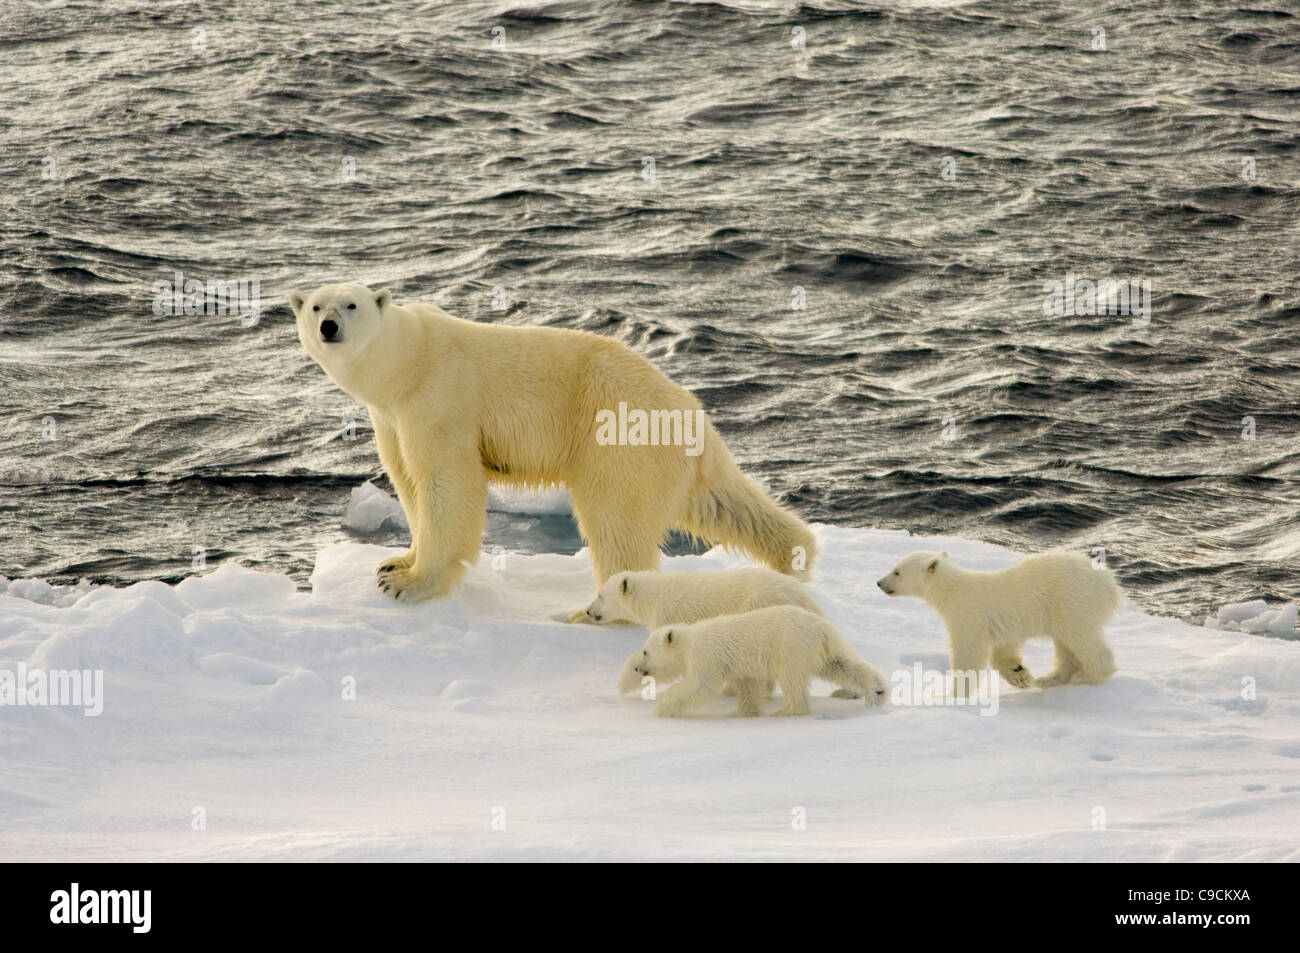 Female Polar Bear (Ursus maritimus) with three young cubs on floating drift ice, Freemansundet (between Barentsøya and Edgeøya), Svalbard Archipelago, Norway Stock Photo